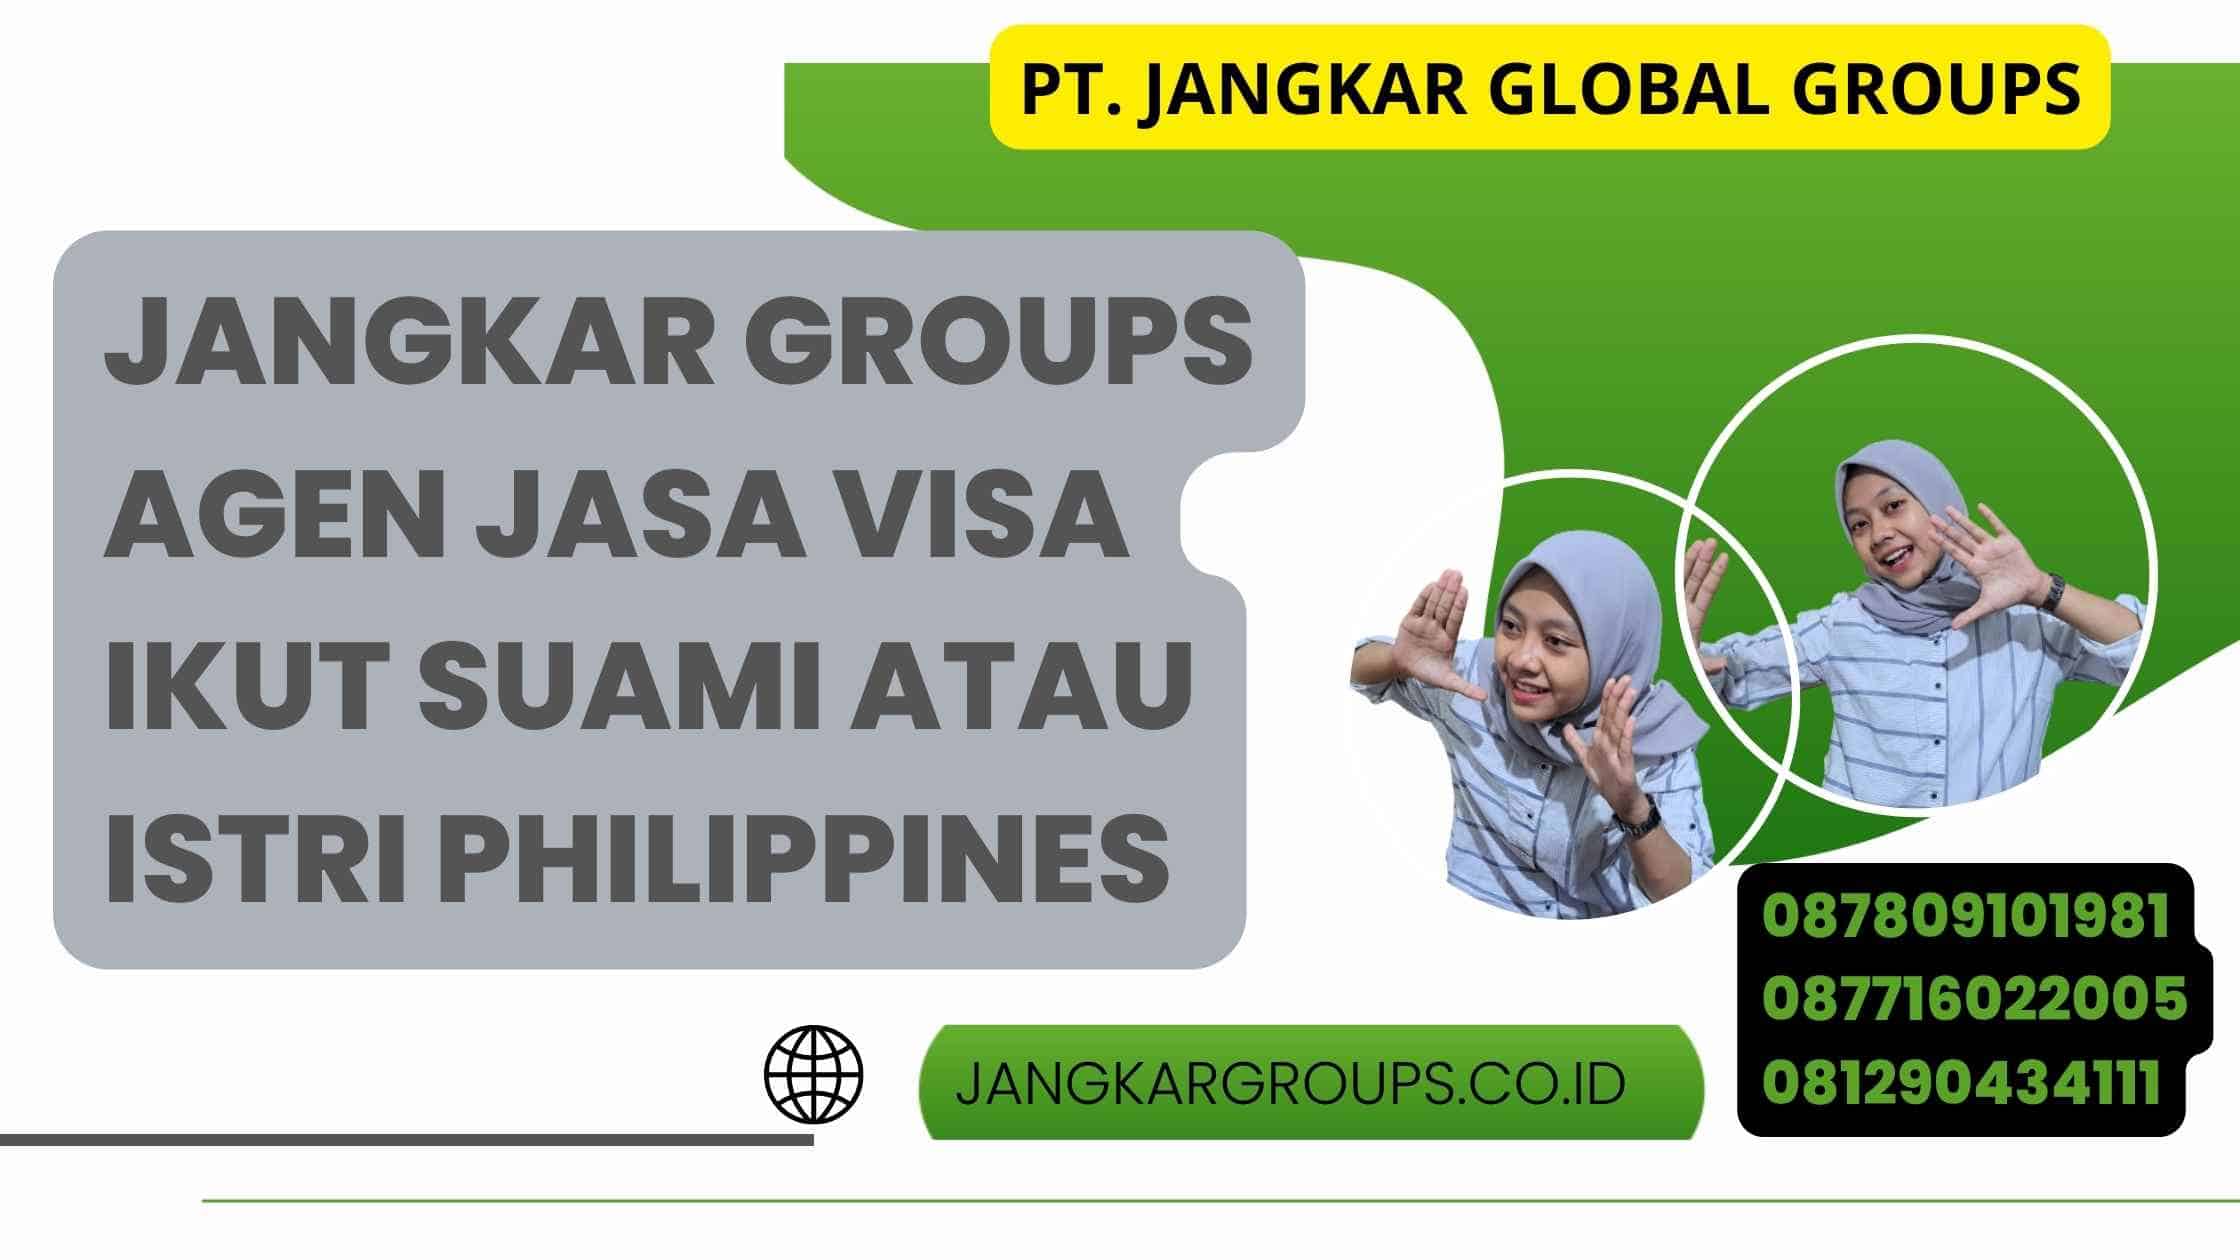 Jangkar Groups Agen Jasa Visa Ikut Suami Atau Istri Philippines